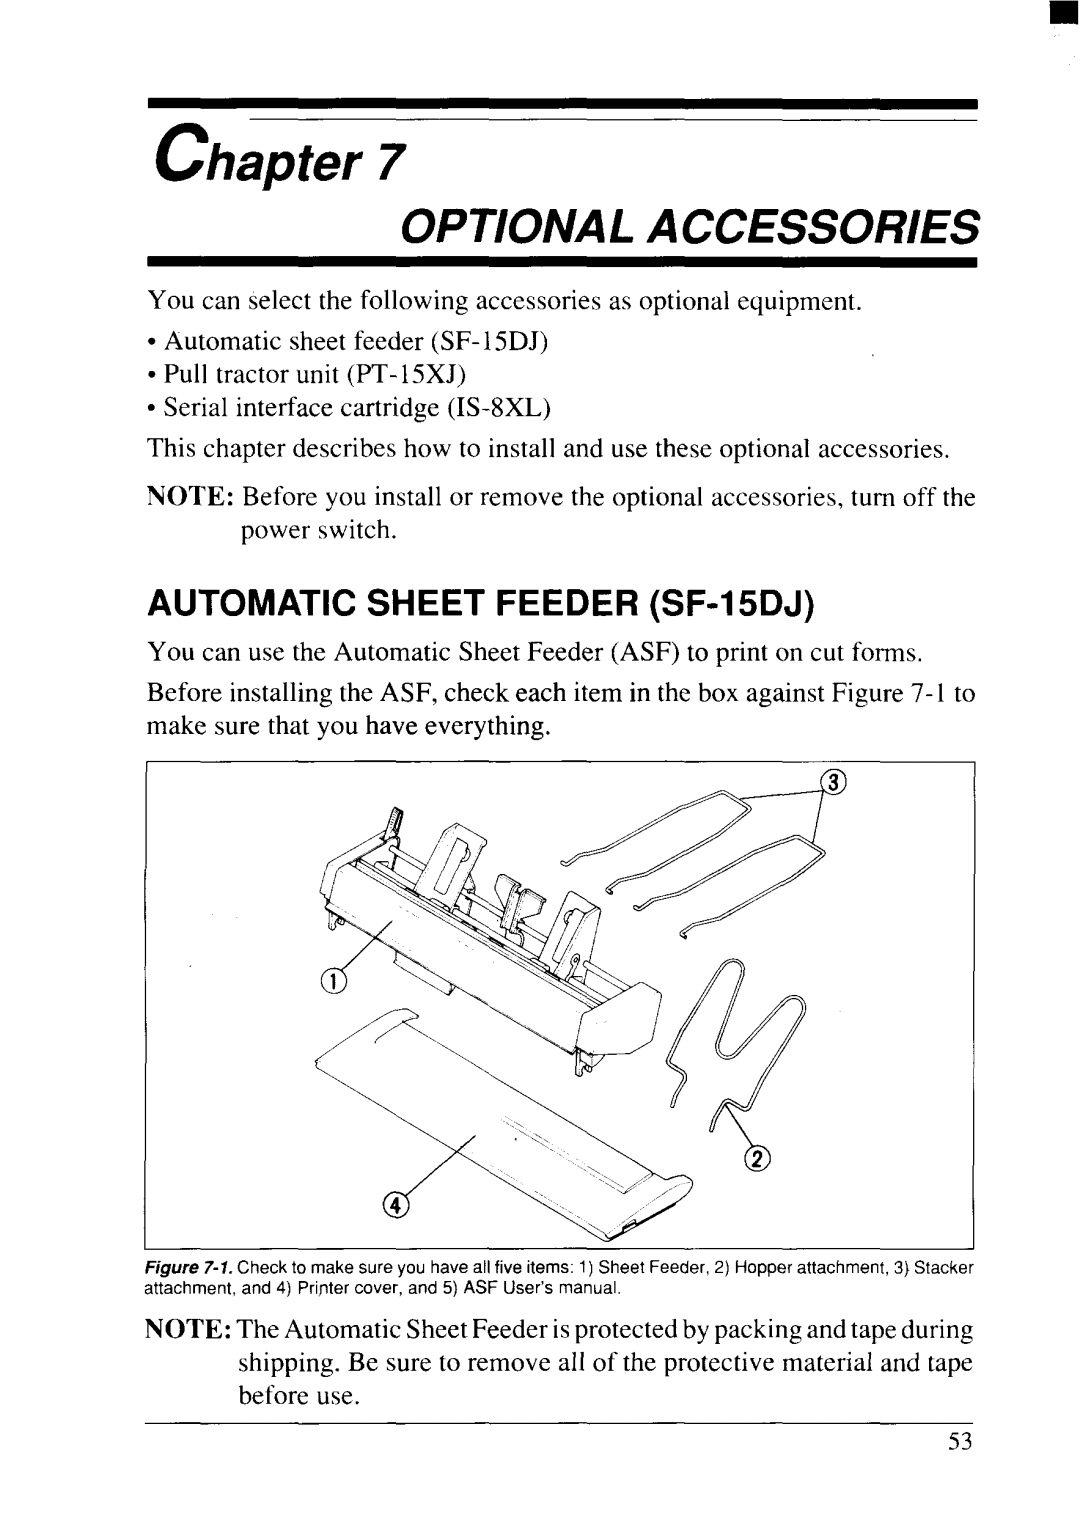 Star Micronics NX-2415II user manual Optional Accessories, AUTOMATIC SHEET FEEDER SF-15DJ, chapter 